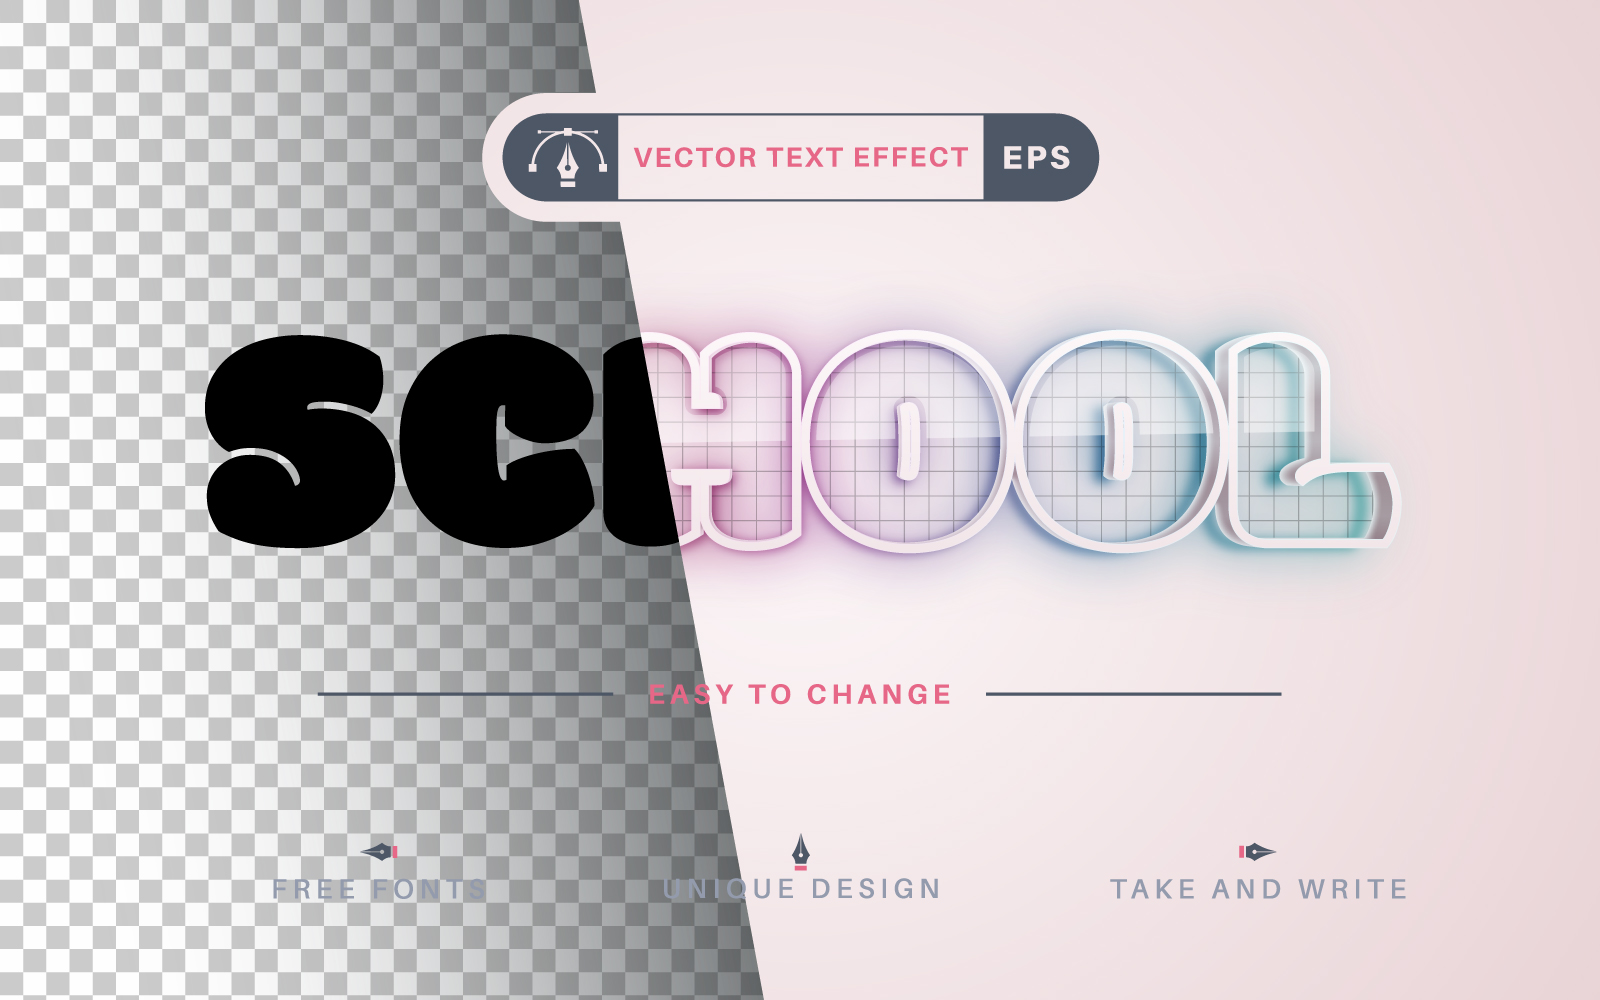 Stroke School - Editable Text Effect, Font Style